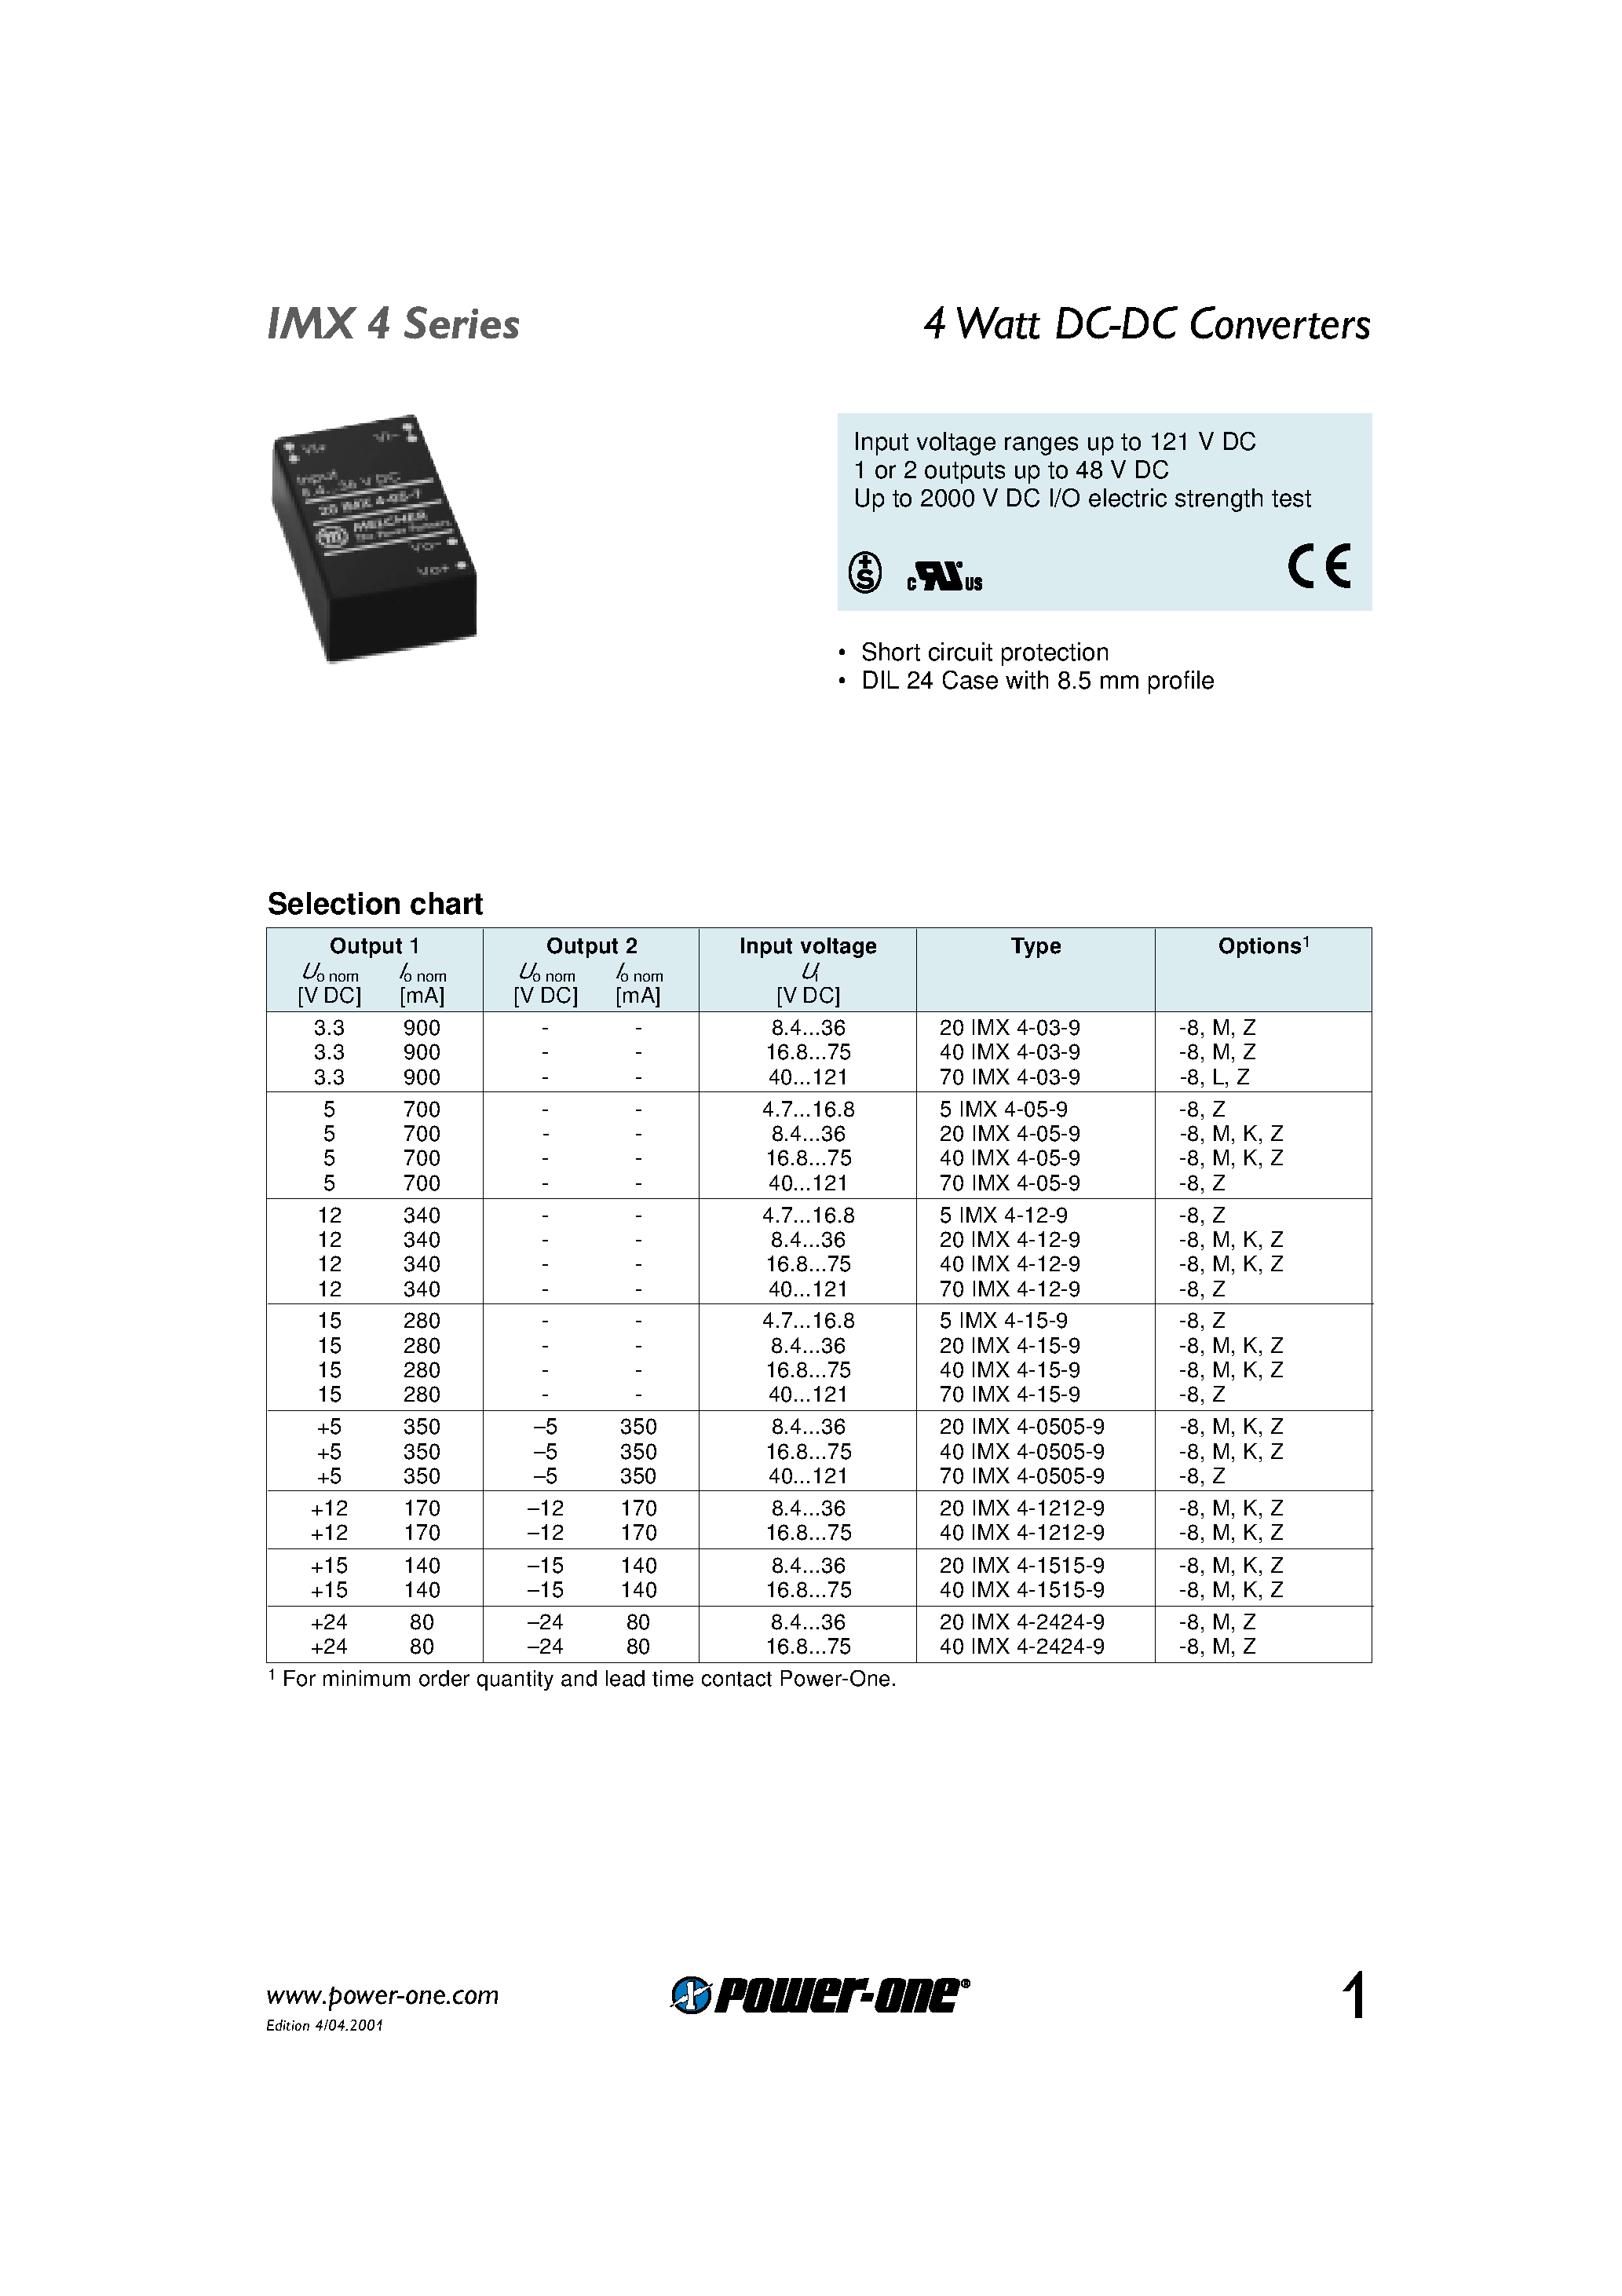 Datasheet 70IMX4-12-9 - 4 Watt DC-DC Converters page 1